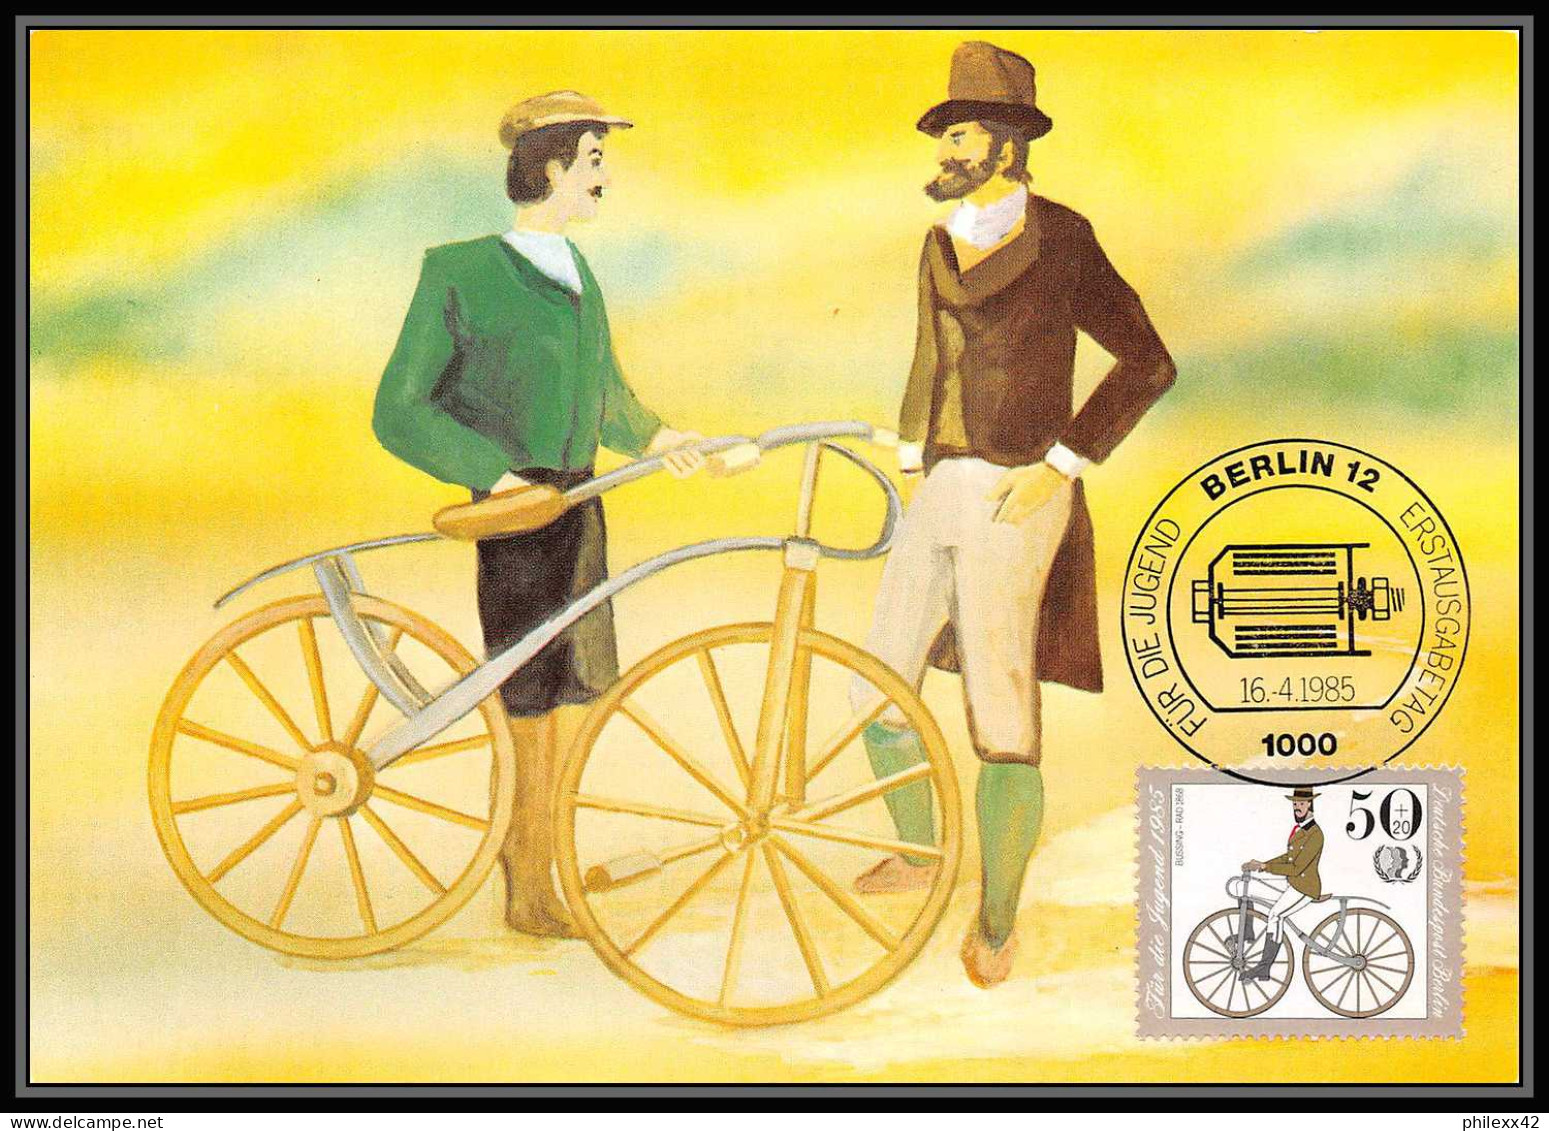 Allemagne (germany) - Carte maximum (card) 2115 - fur die jugend berlin SPORT velo (Cycling) 1985 lot de 5 cartes